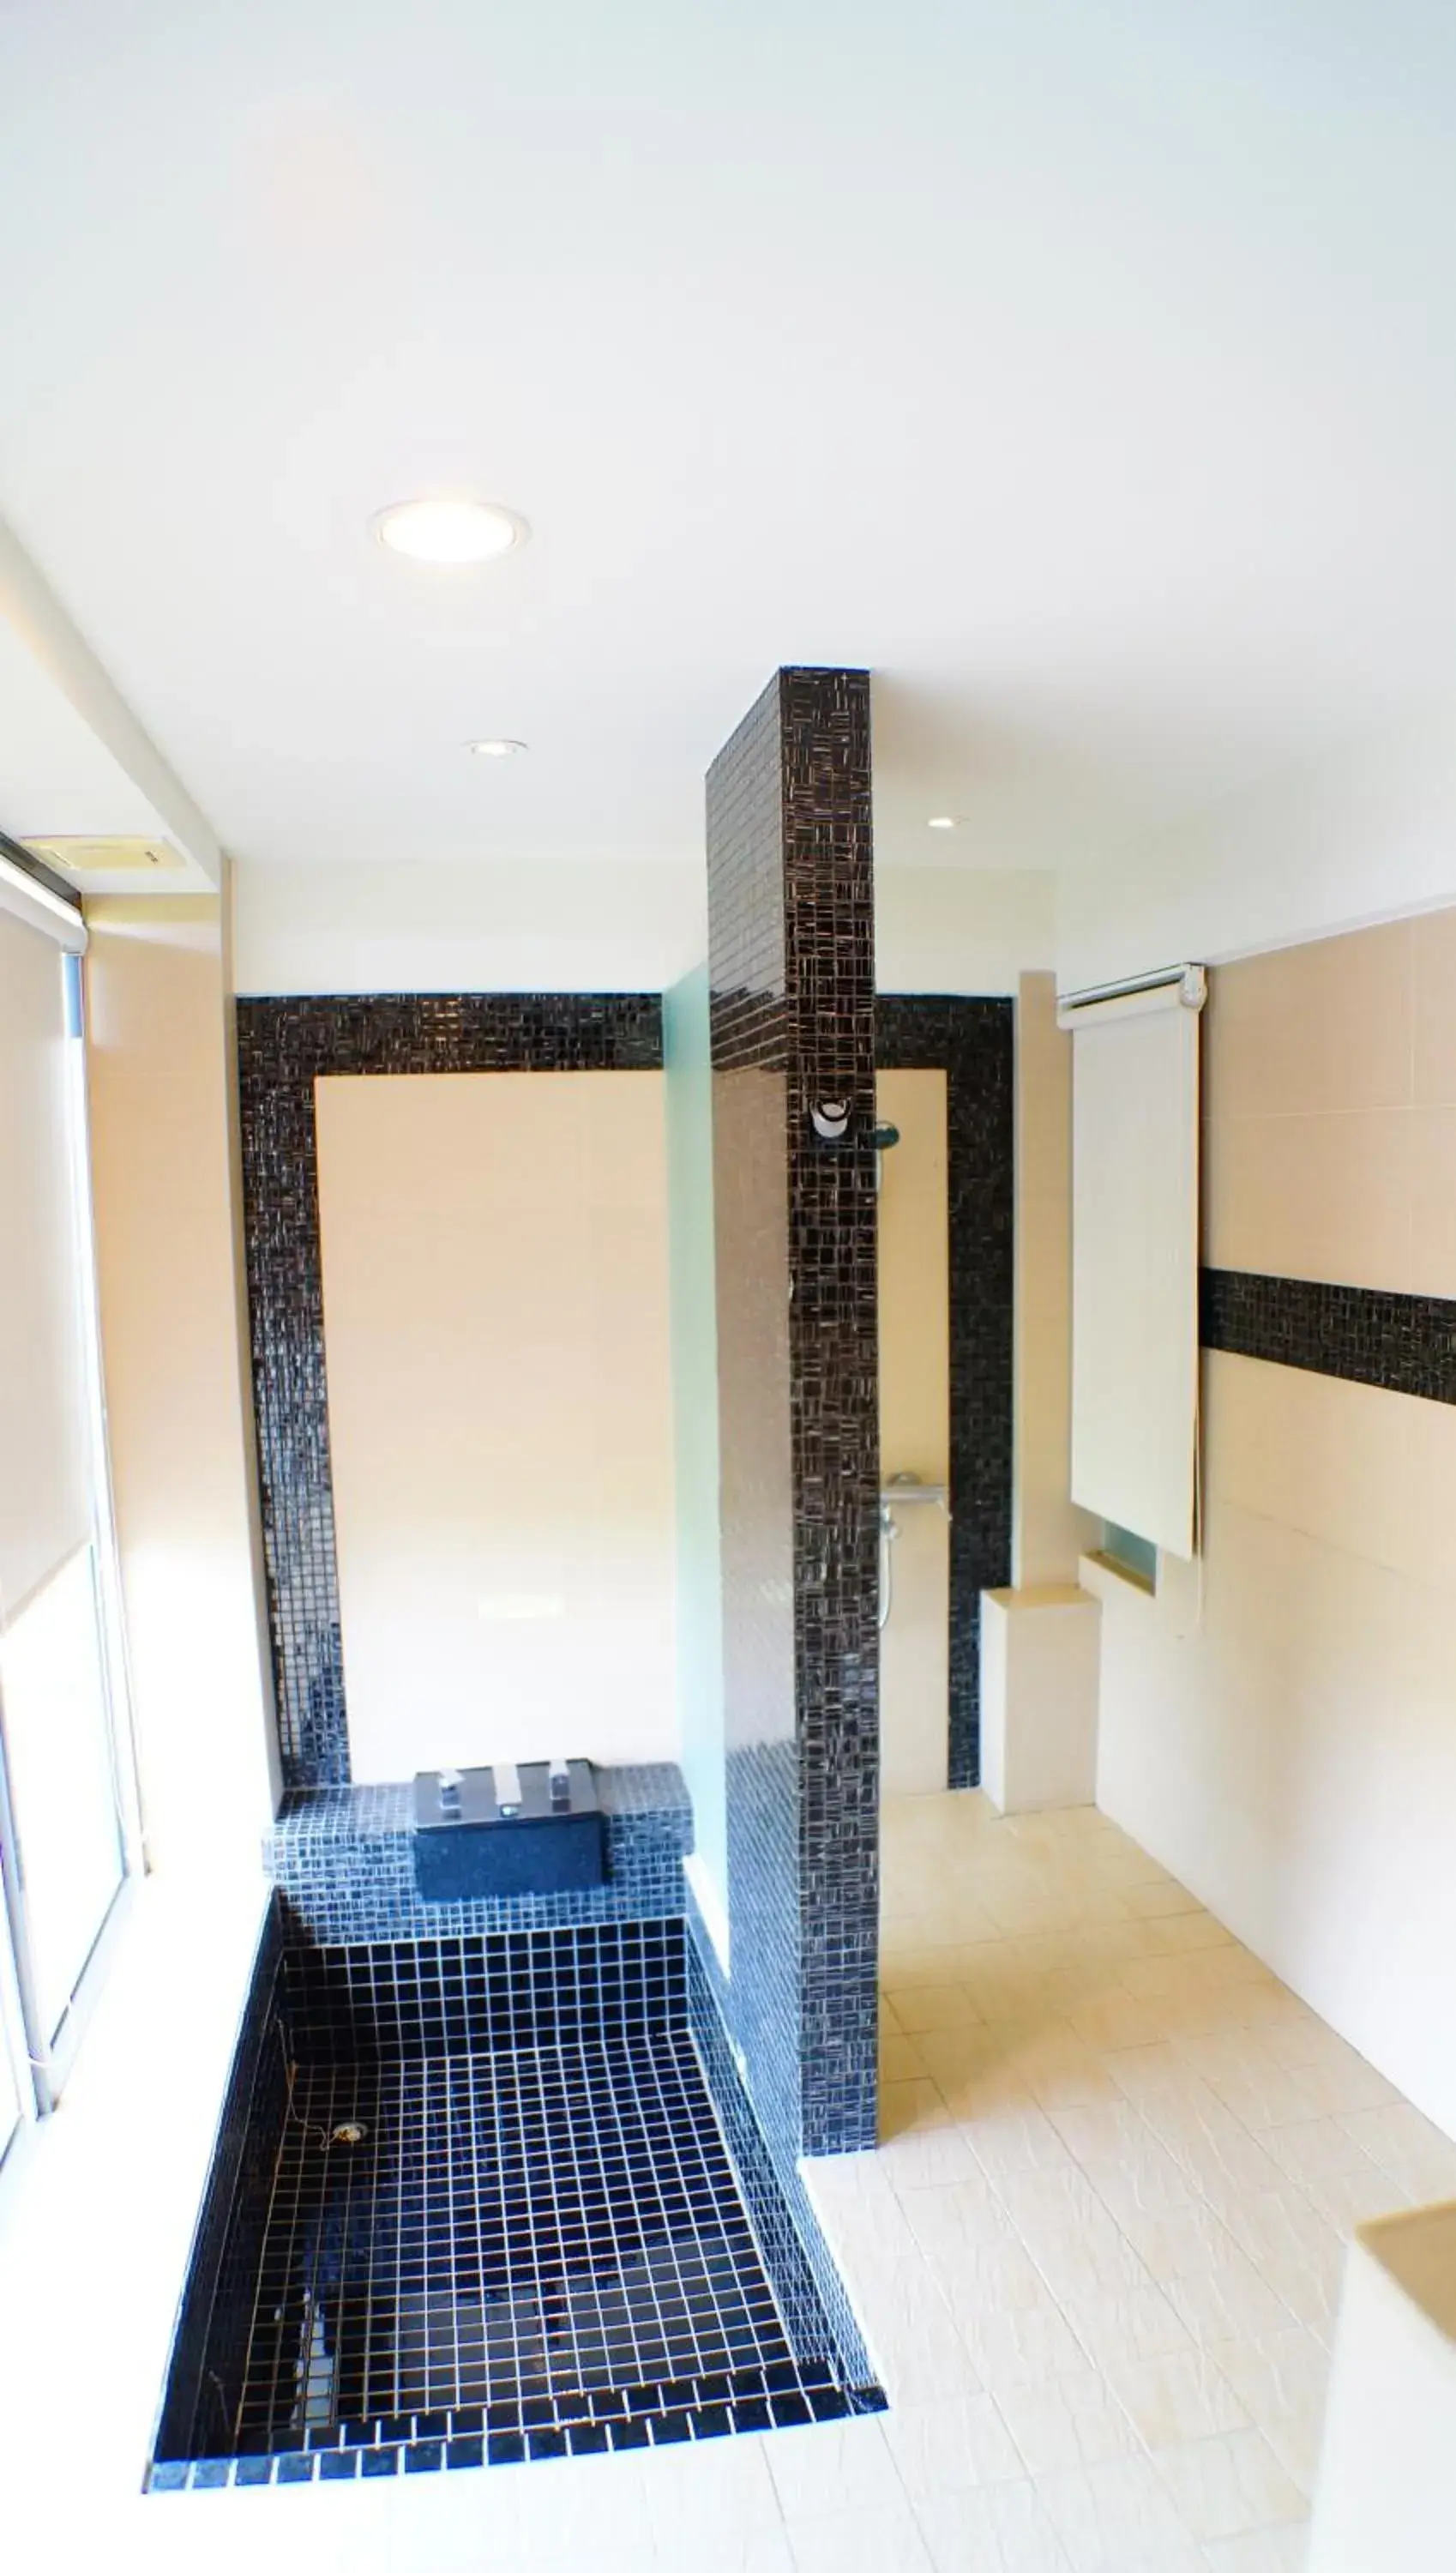 Bathroom in Lan Yang Resort Four Seasons